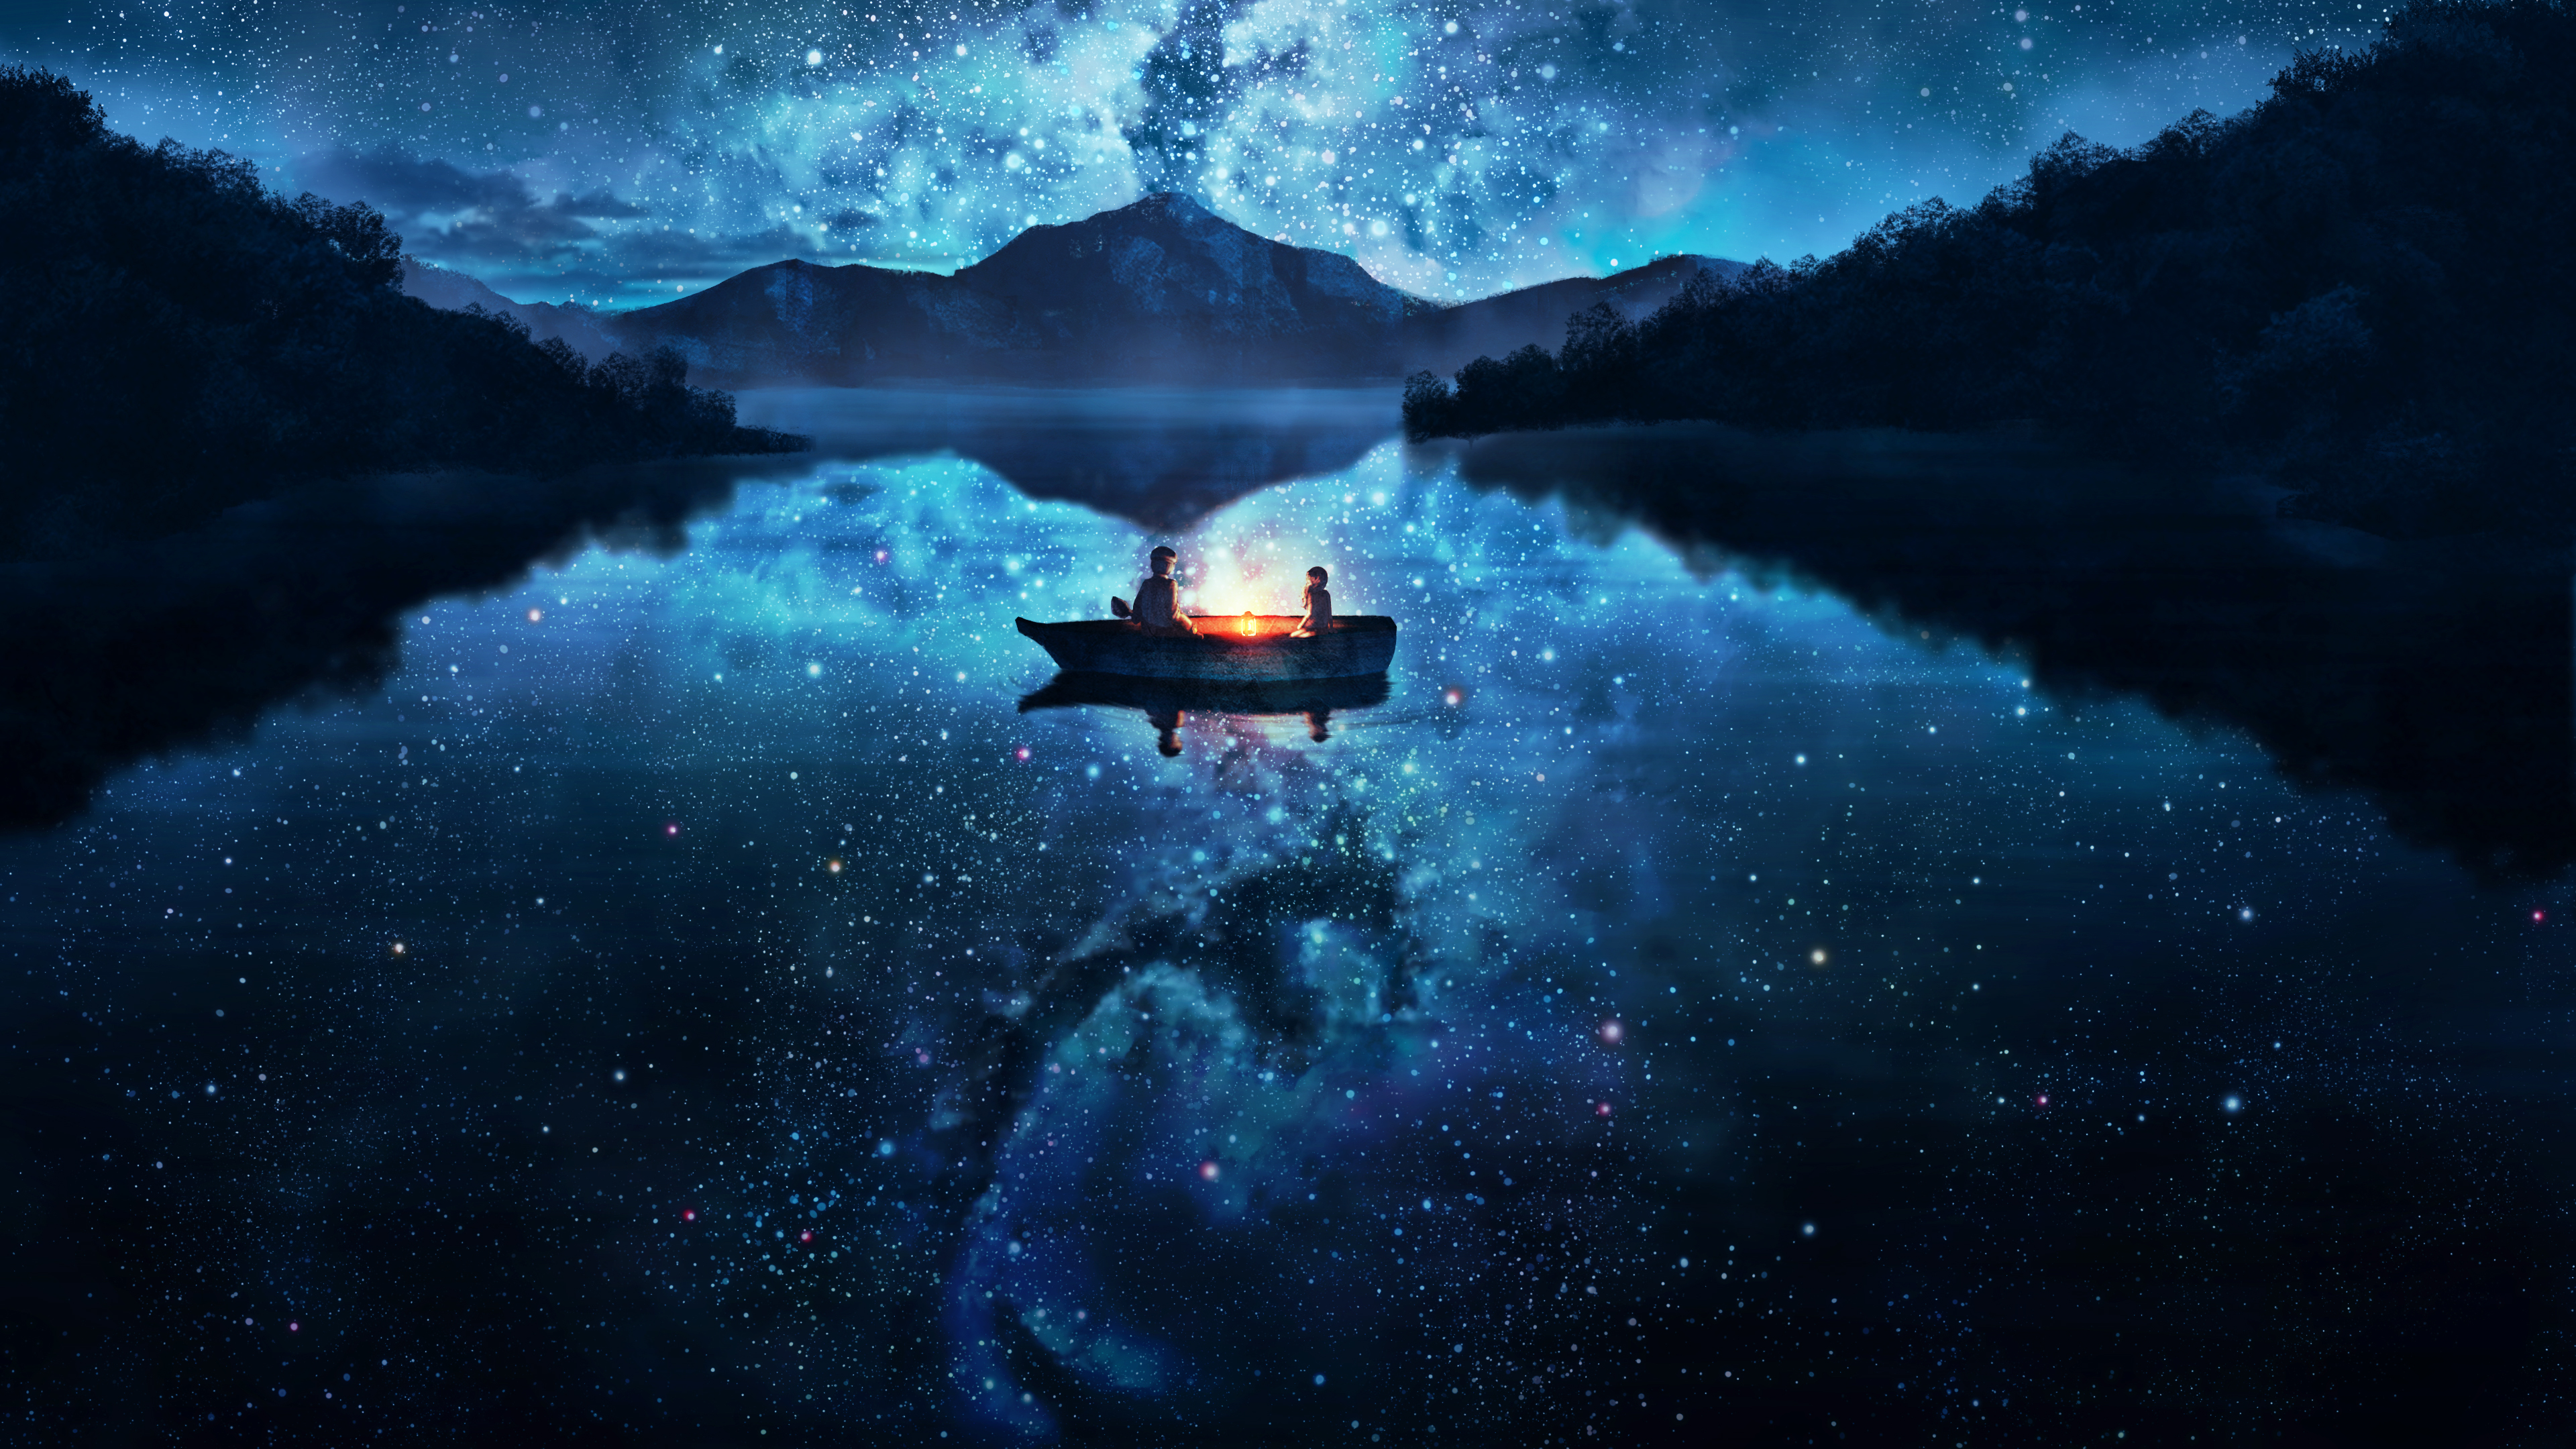 night, anime, reflection, starry sky, lake, boat, scenic